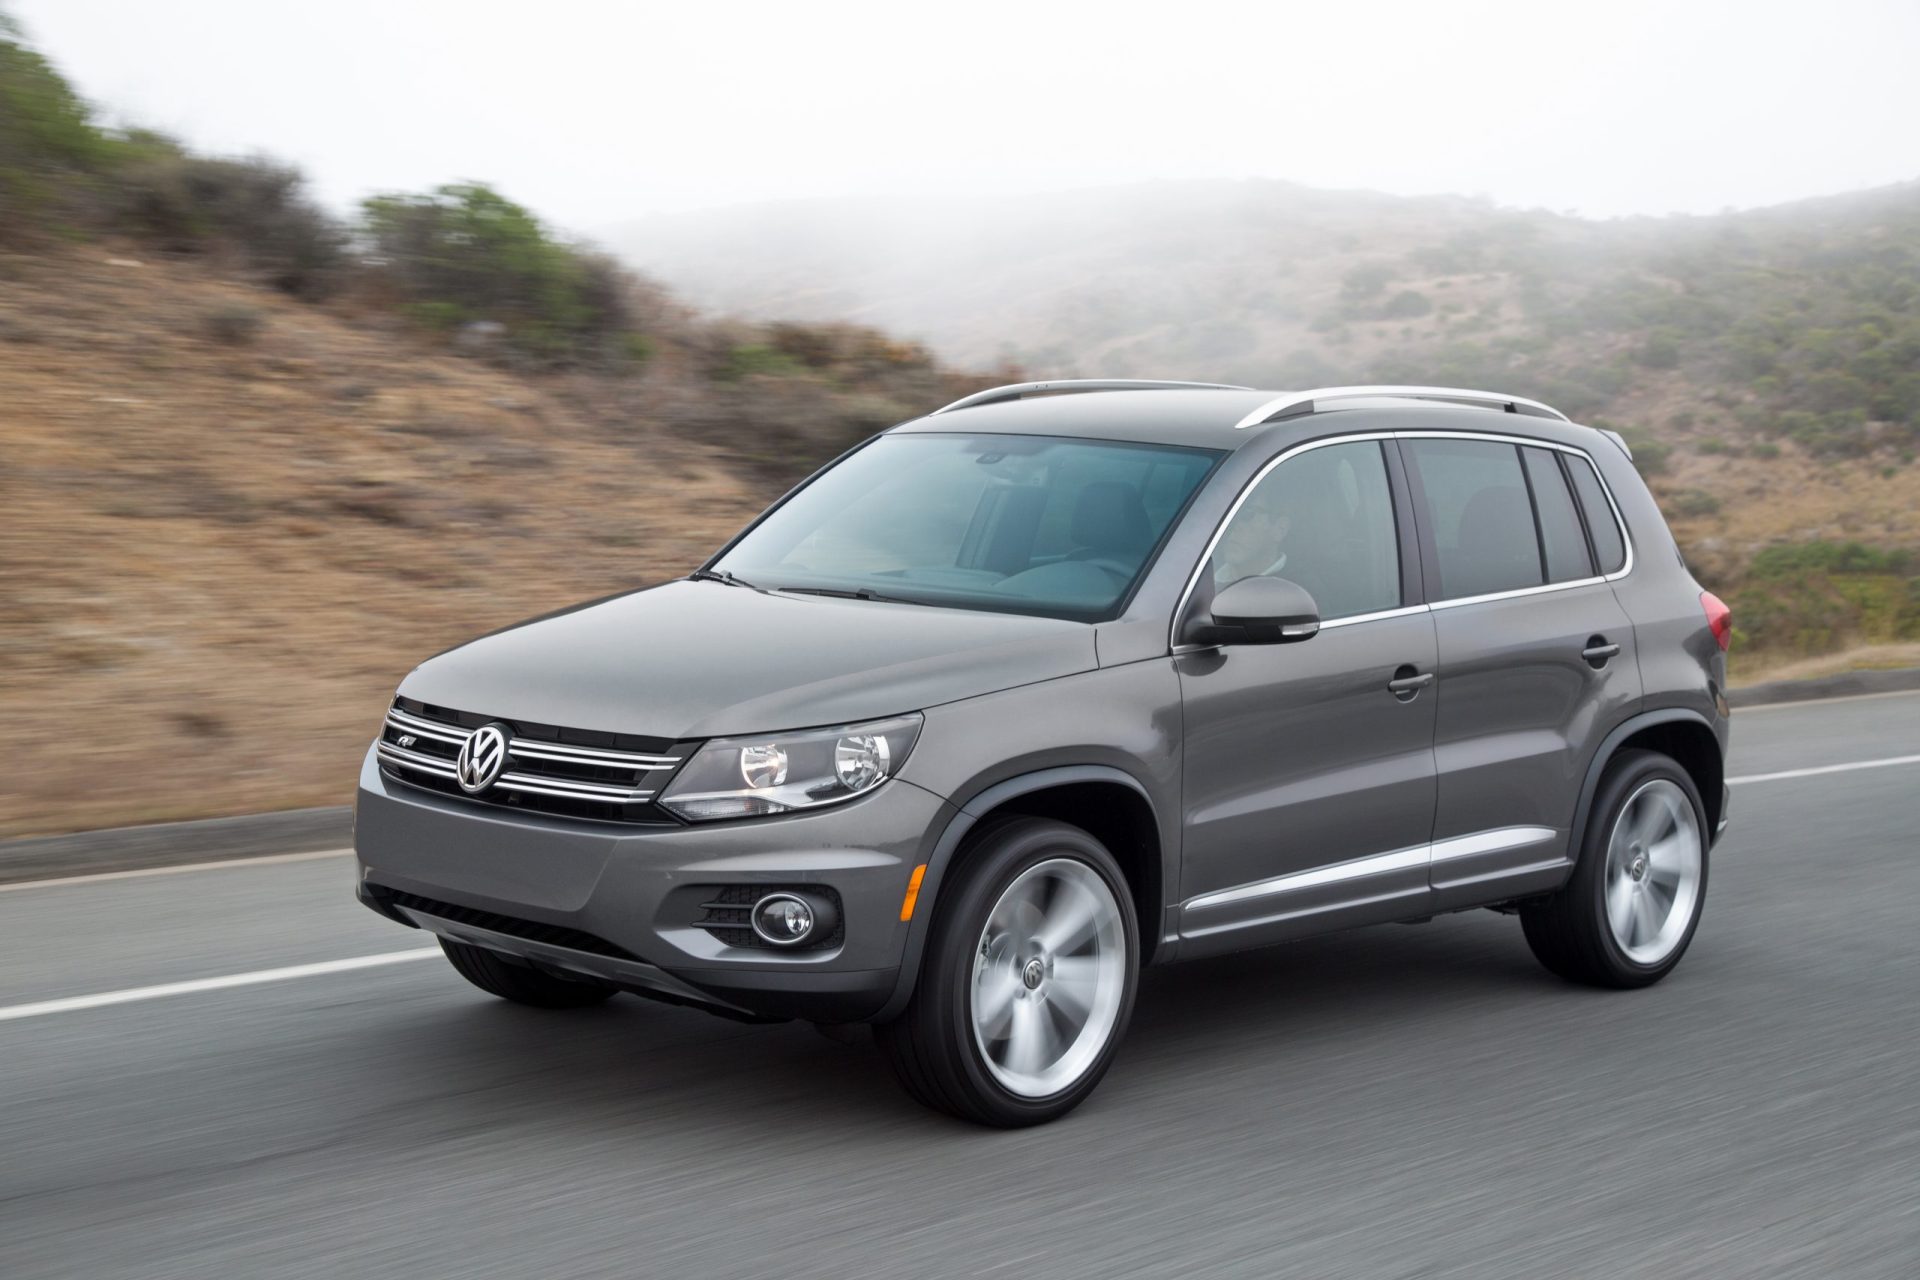 Volkswagen enfrenta obstáculo inesperado nos EUA: falta de carros